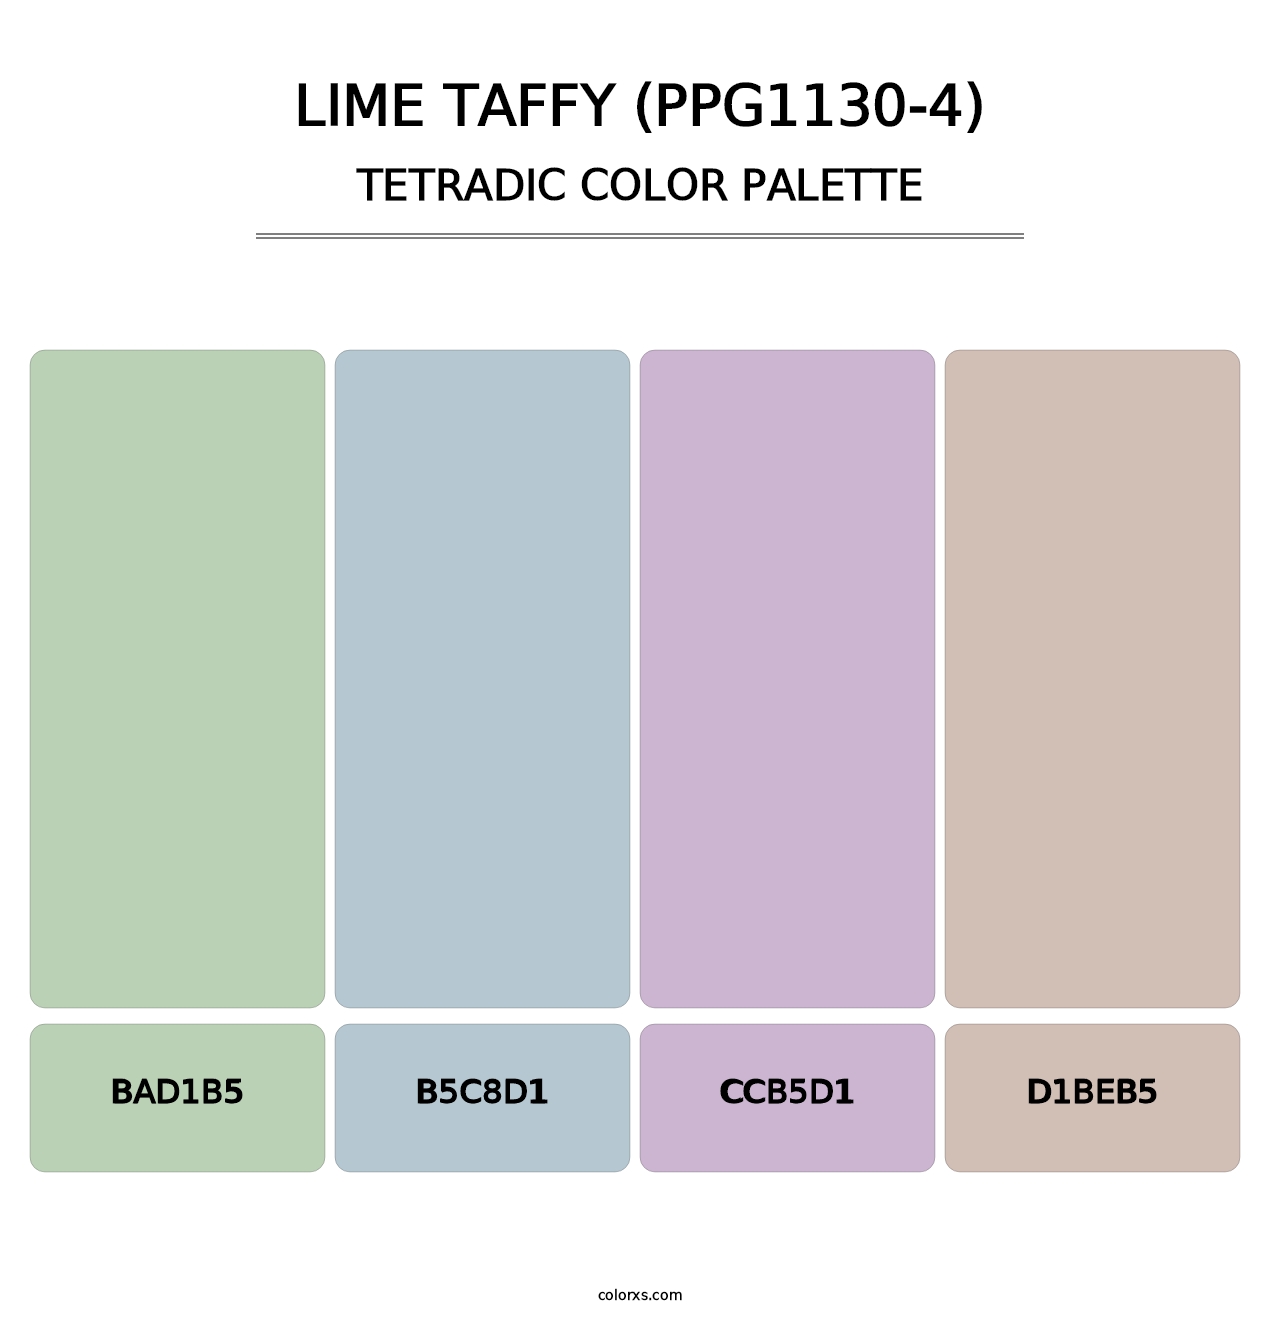 Lime Taffy (PPG1130-4) - Tetradic Color Palette